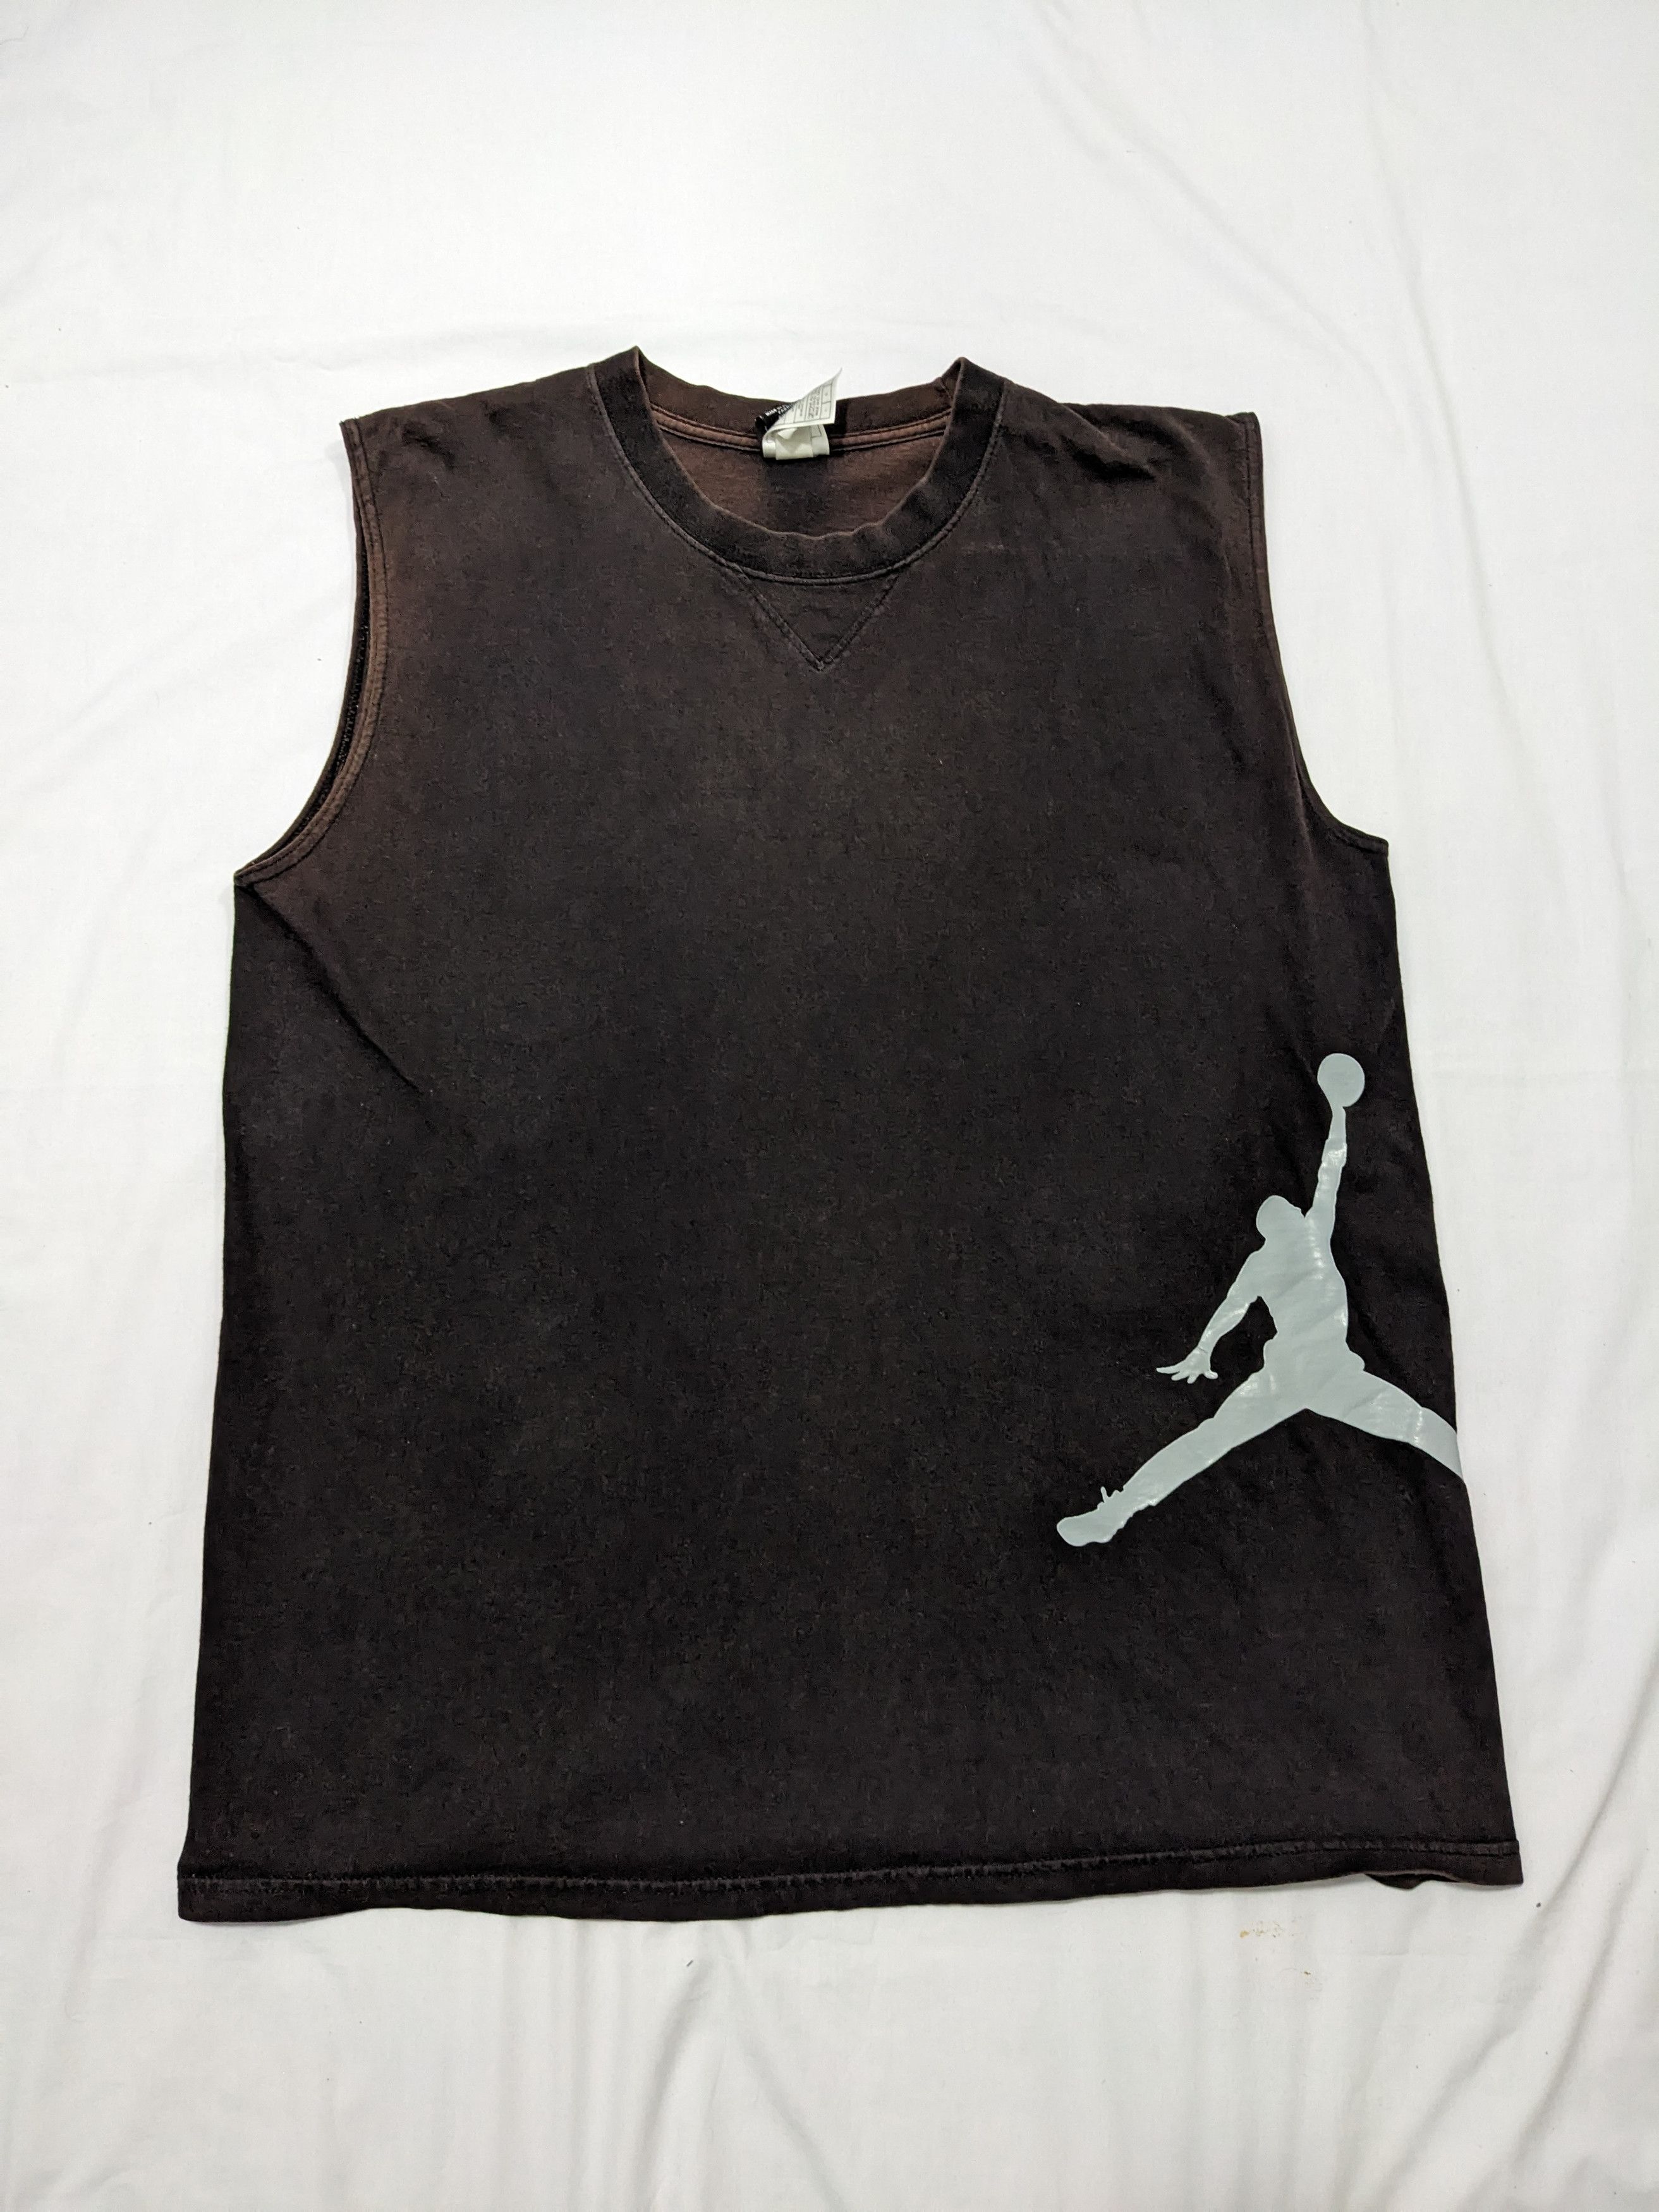 Jordan Brand - Vintage Y2K Air Jordan Sunfaded Black Tank Top Shirt - 1